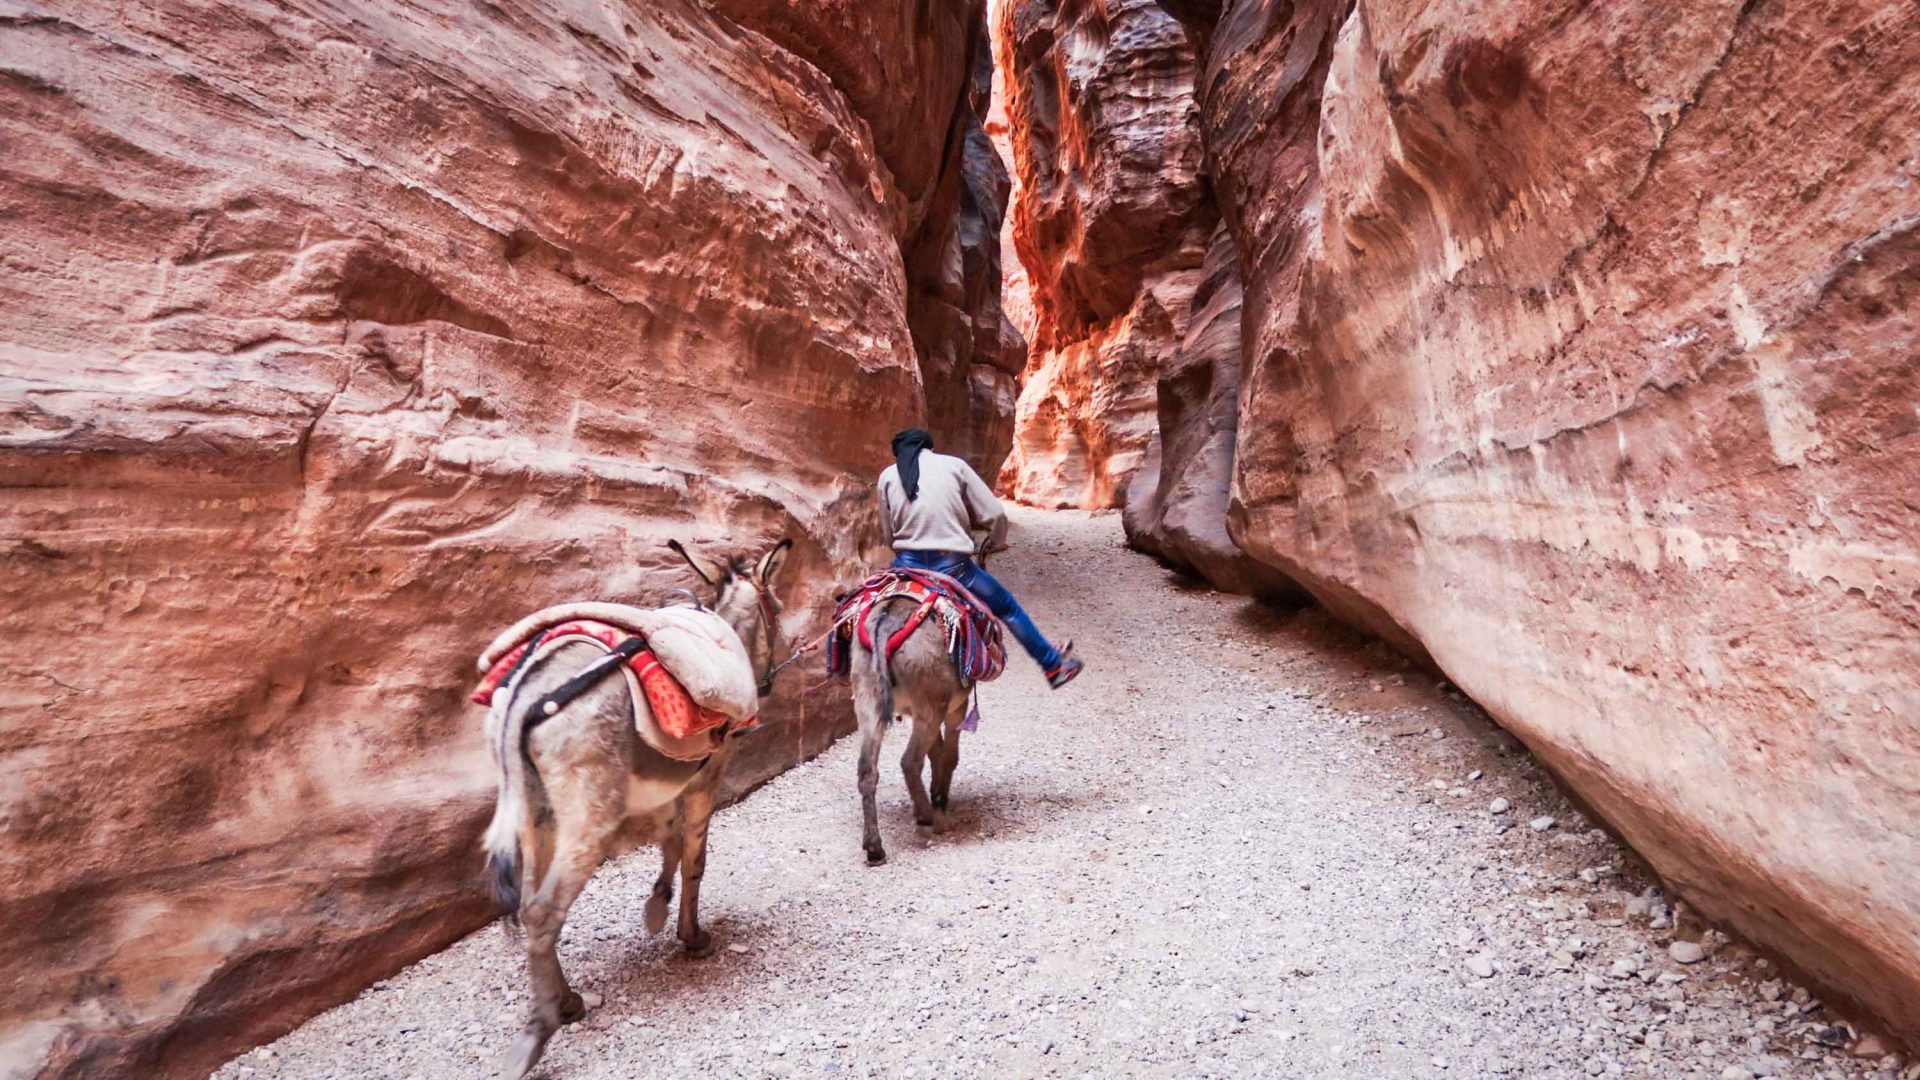 A Bedouin rides his donkeys through the Siq towards the Treasury at Petra, Jordan.